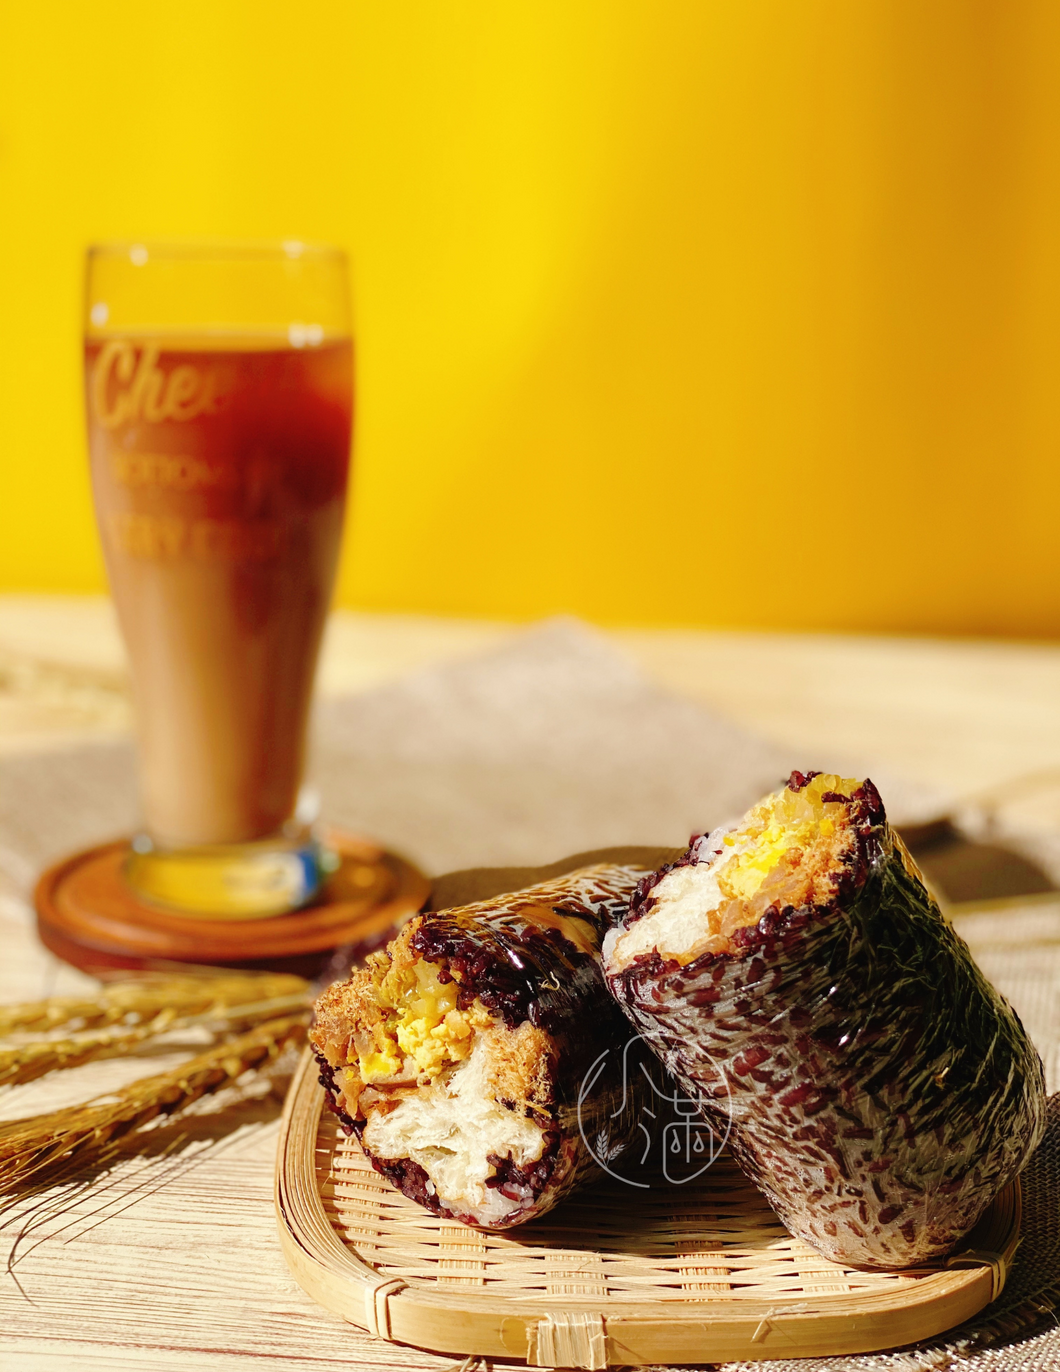 紫米卡滋＋豆漿紅茶 <br> Purple crunchy Riceburrito with soymilk black tea